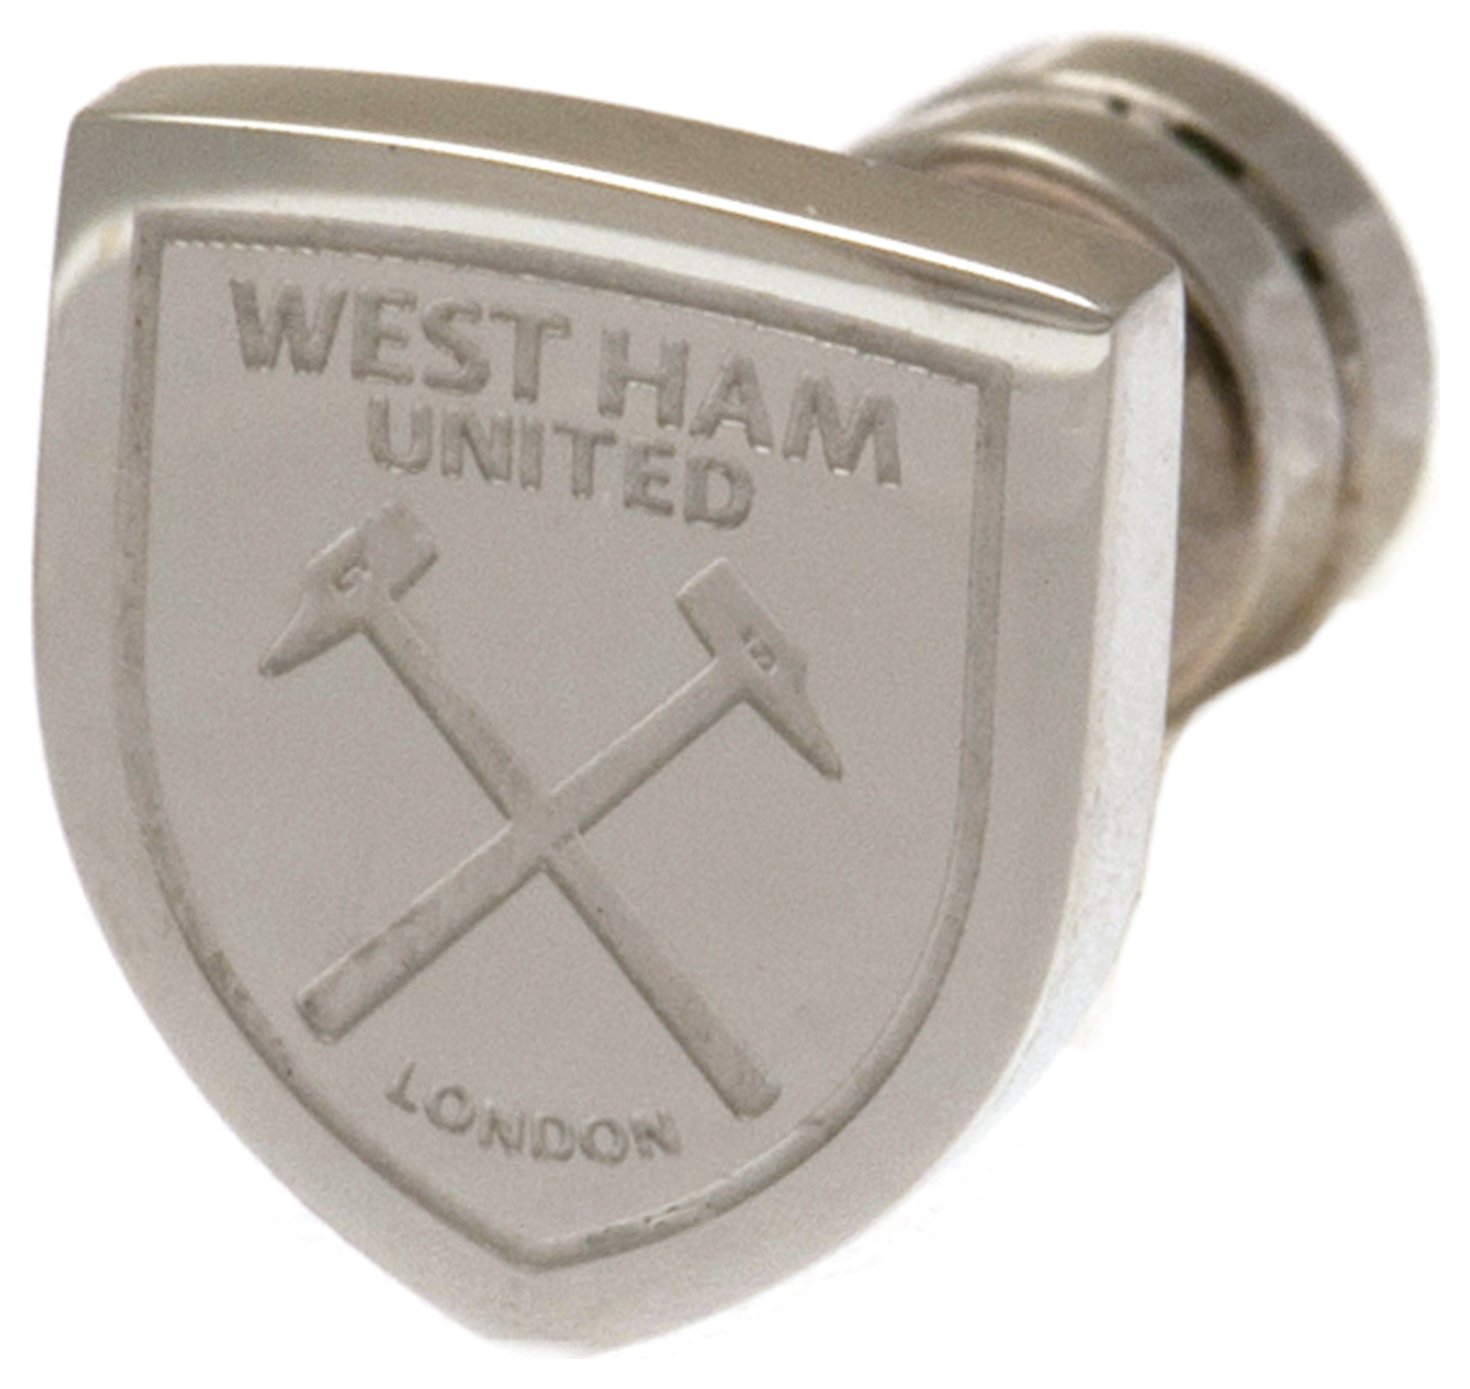 Stainless Steel West Ham Utd Crest Stud Earring